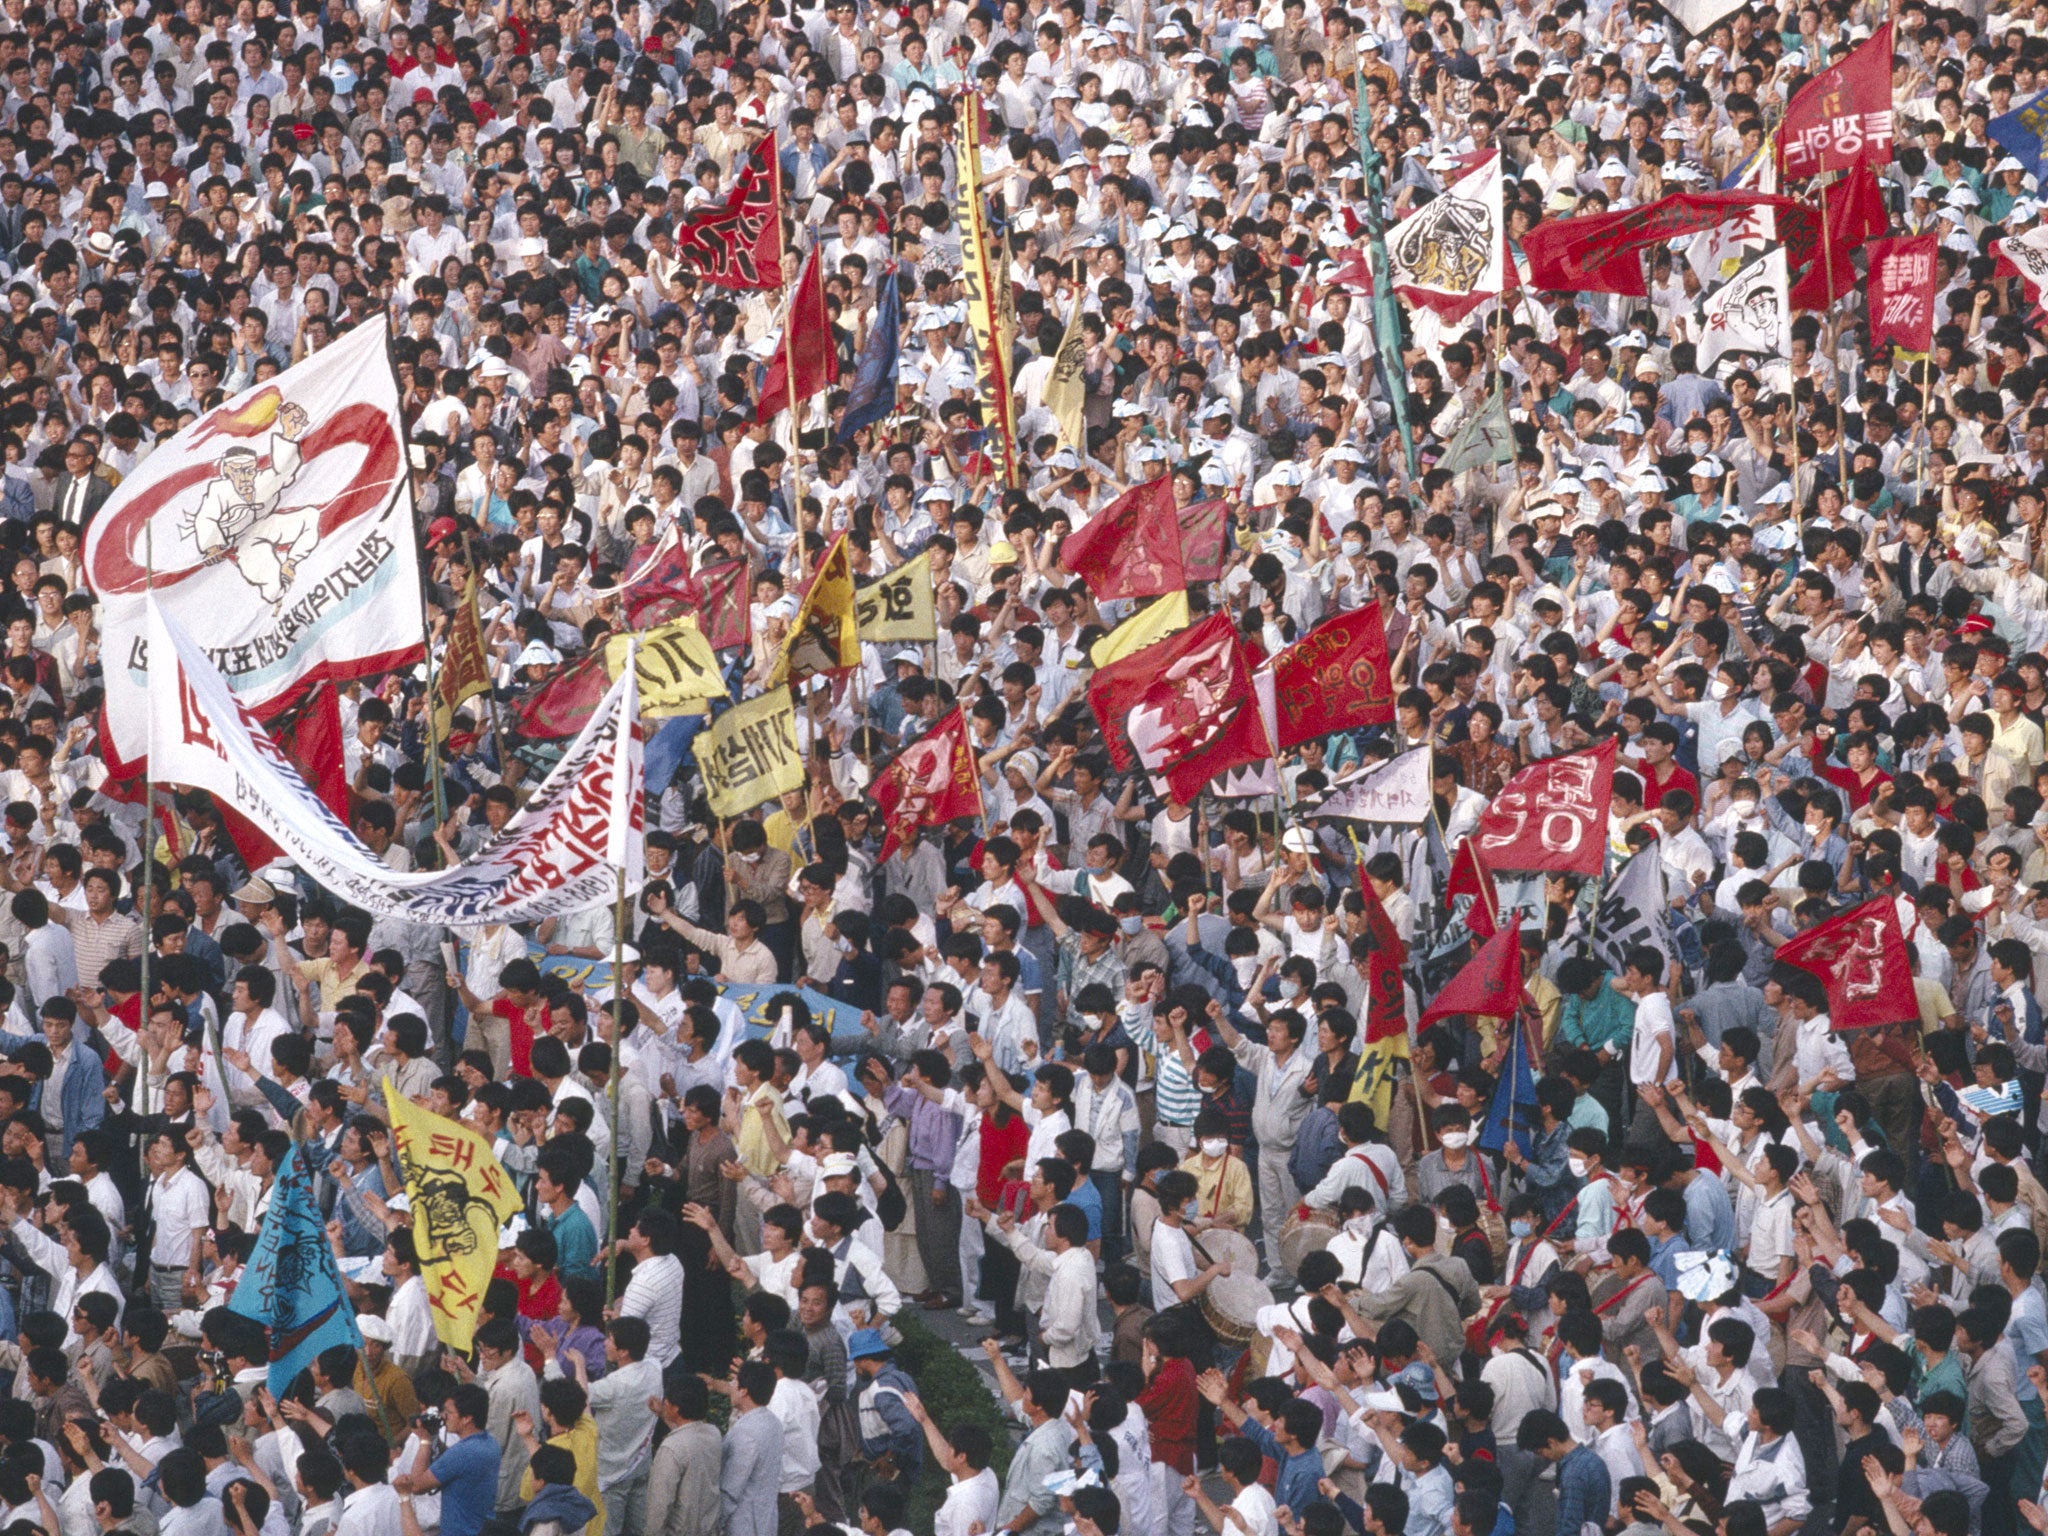 A 2007 student demonstration commemorating the 1980 Kwangju Massacre